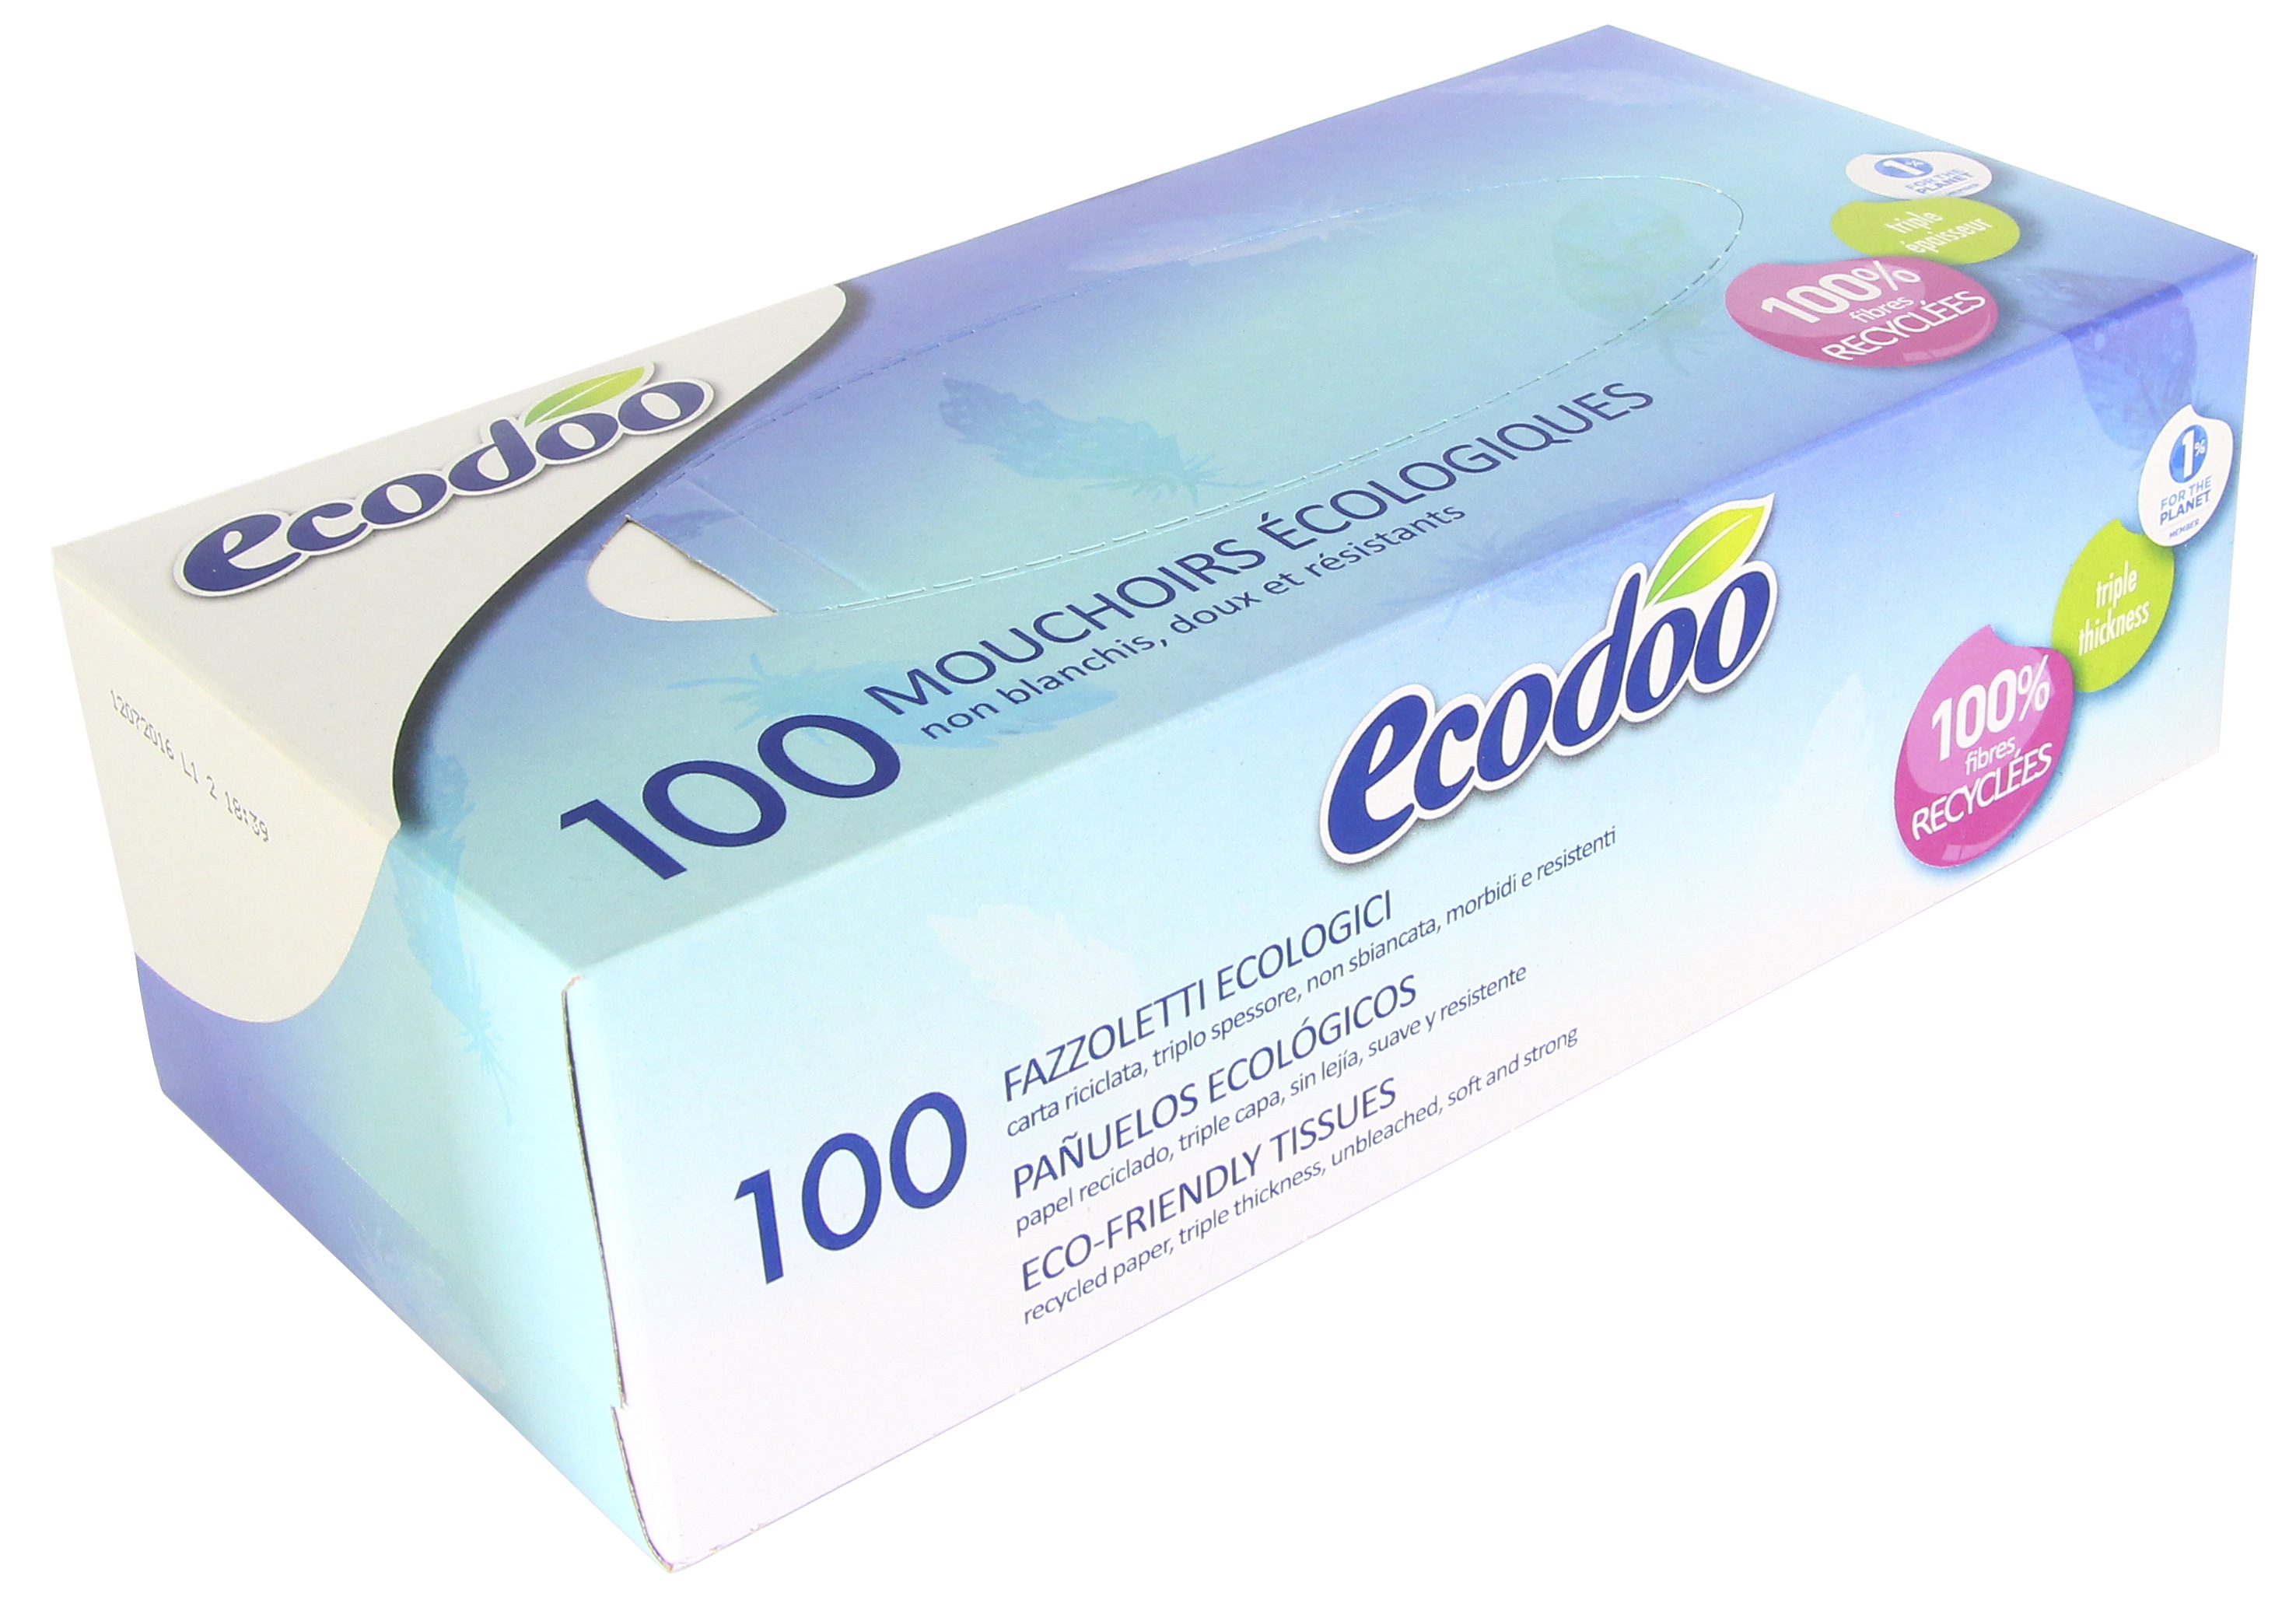 Ecodoo Tissues 100pcs